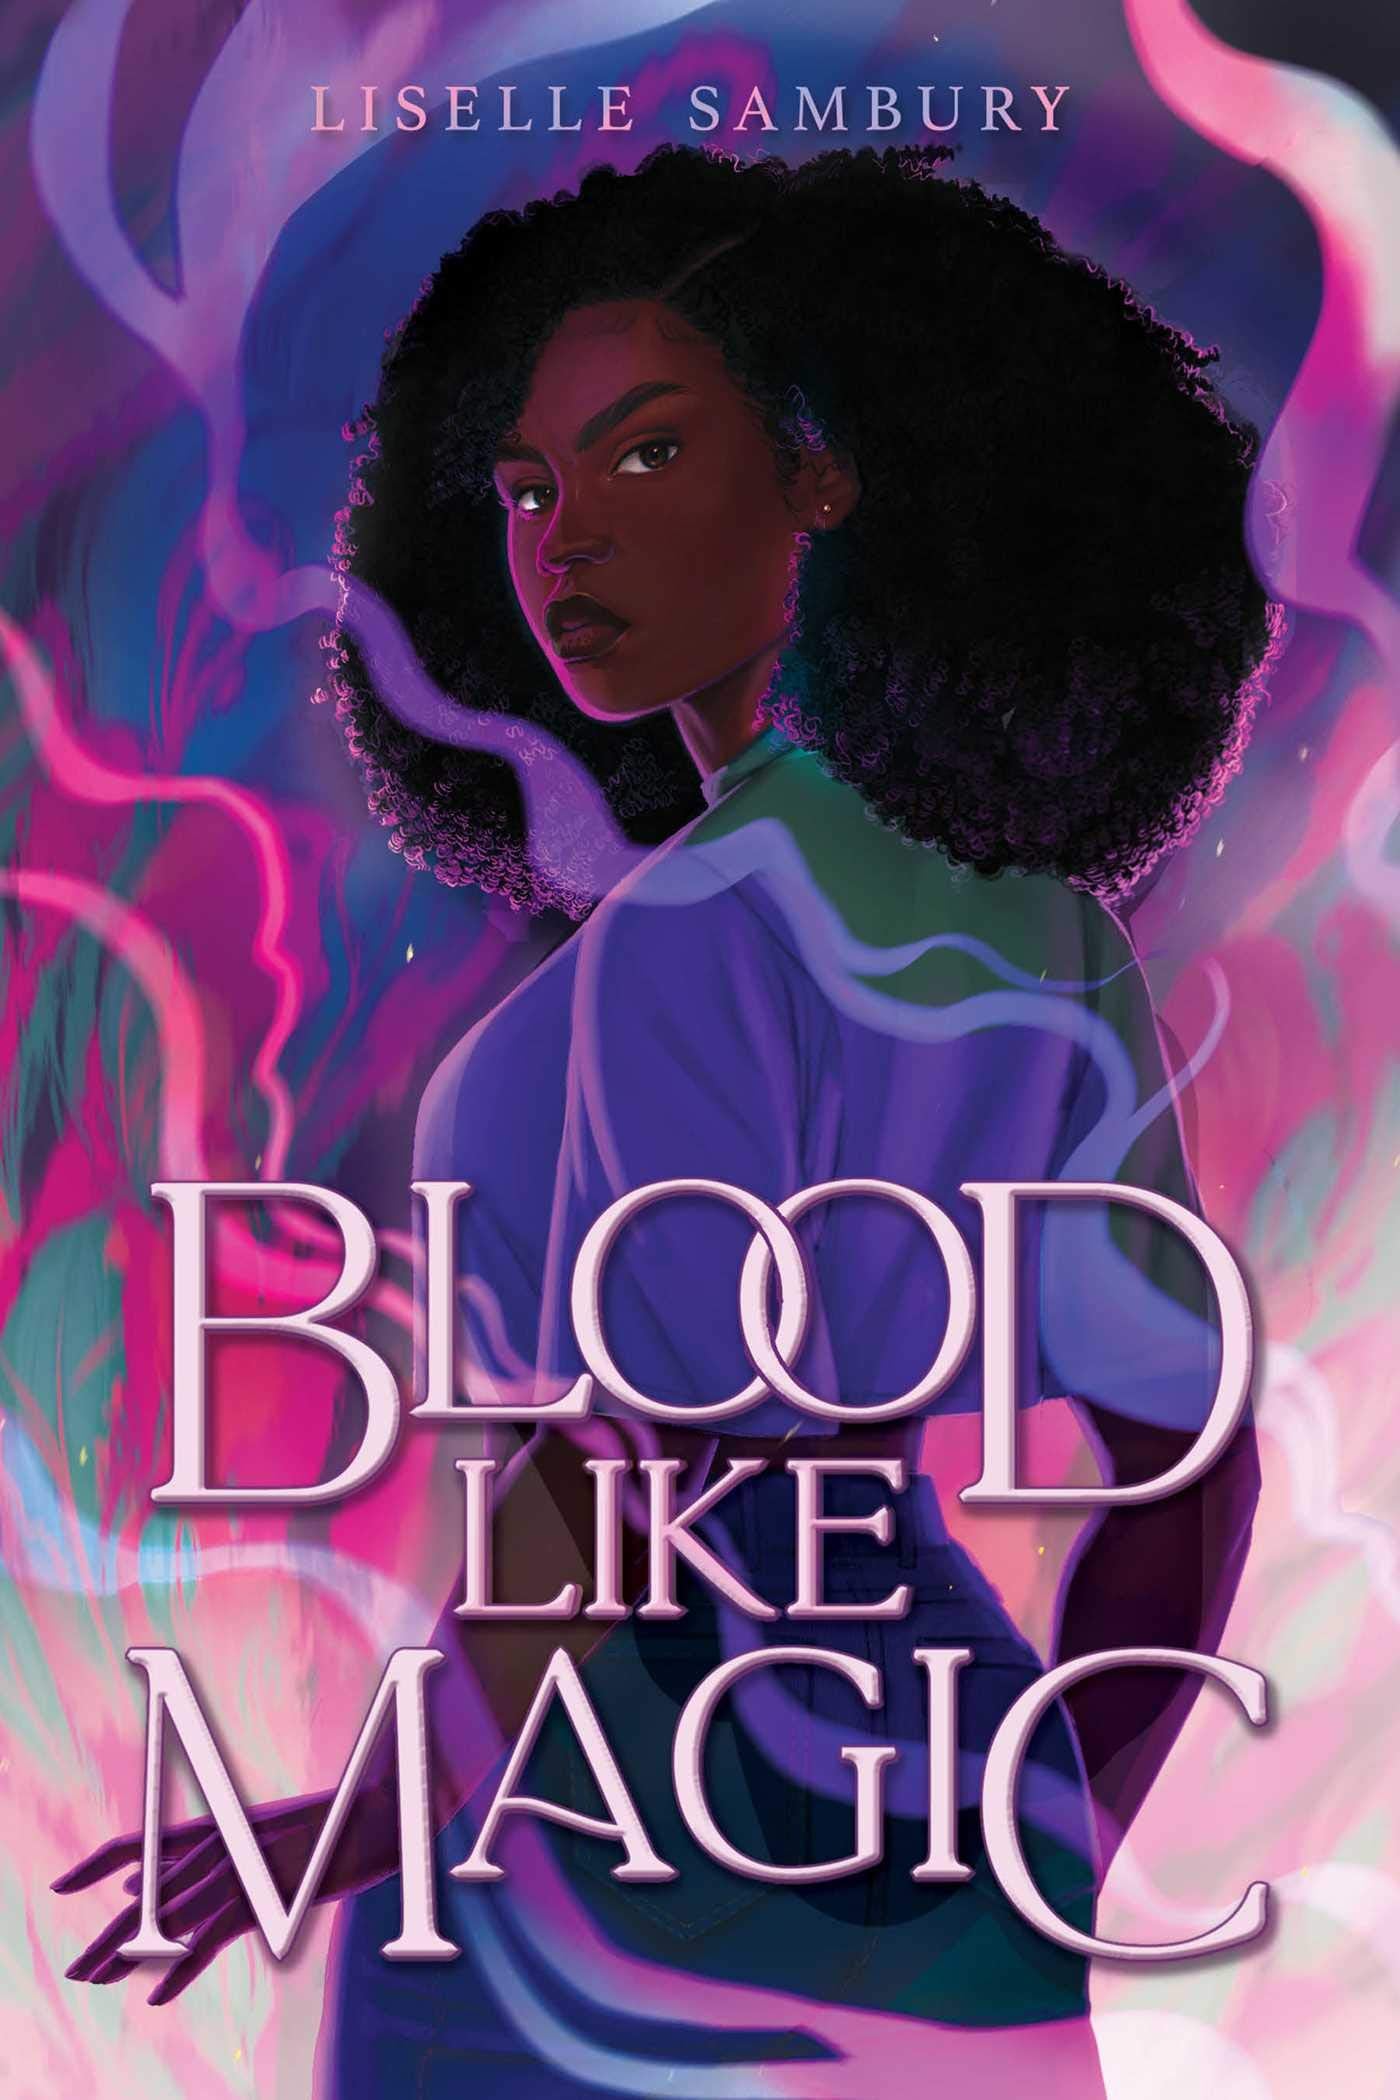 Black Girl Magic, African American Girl, Hearts - Black Girl Magic